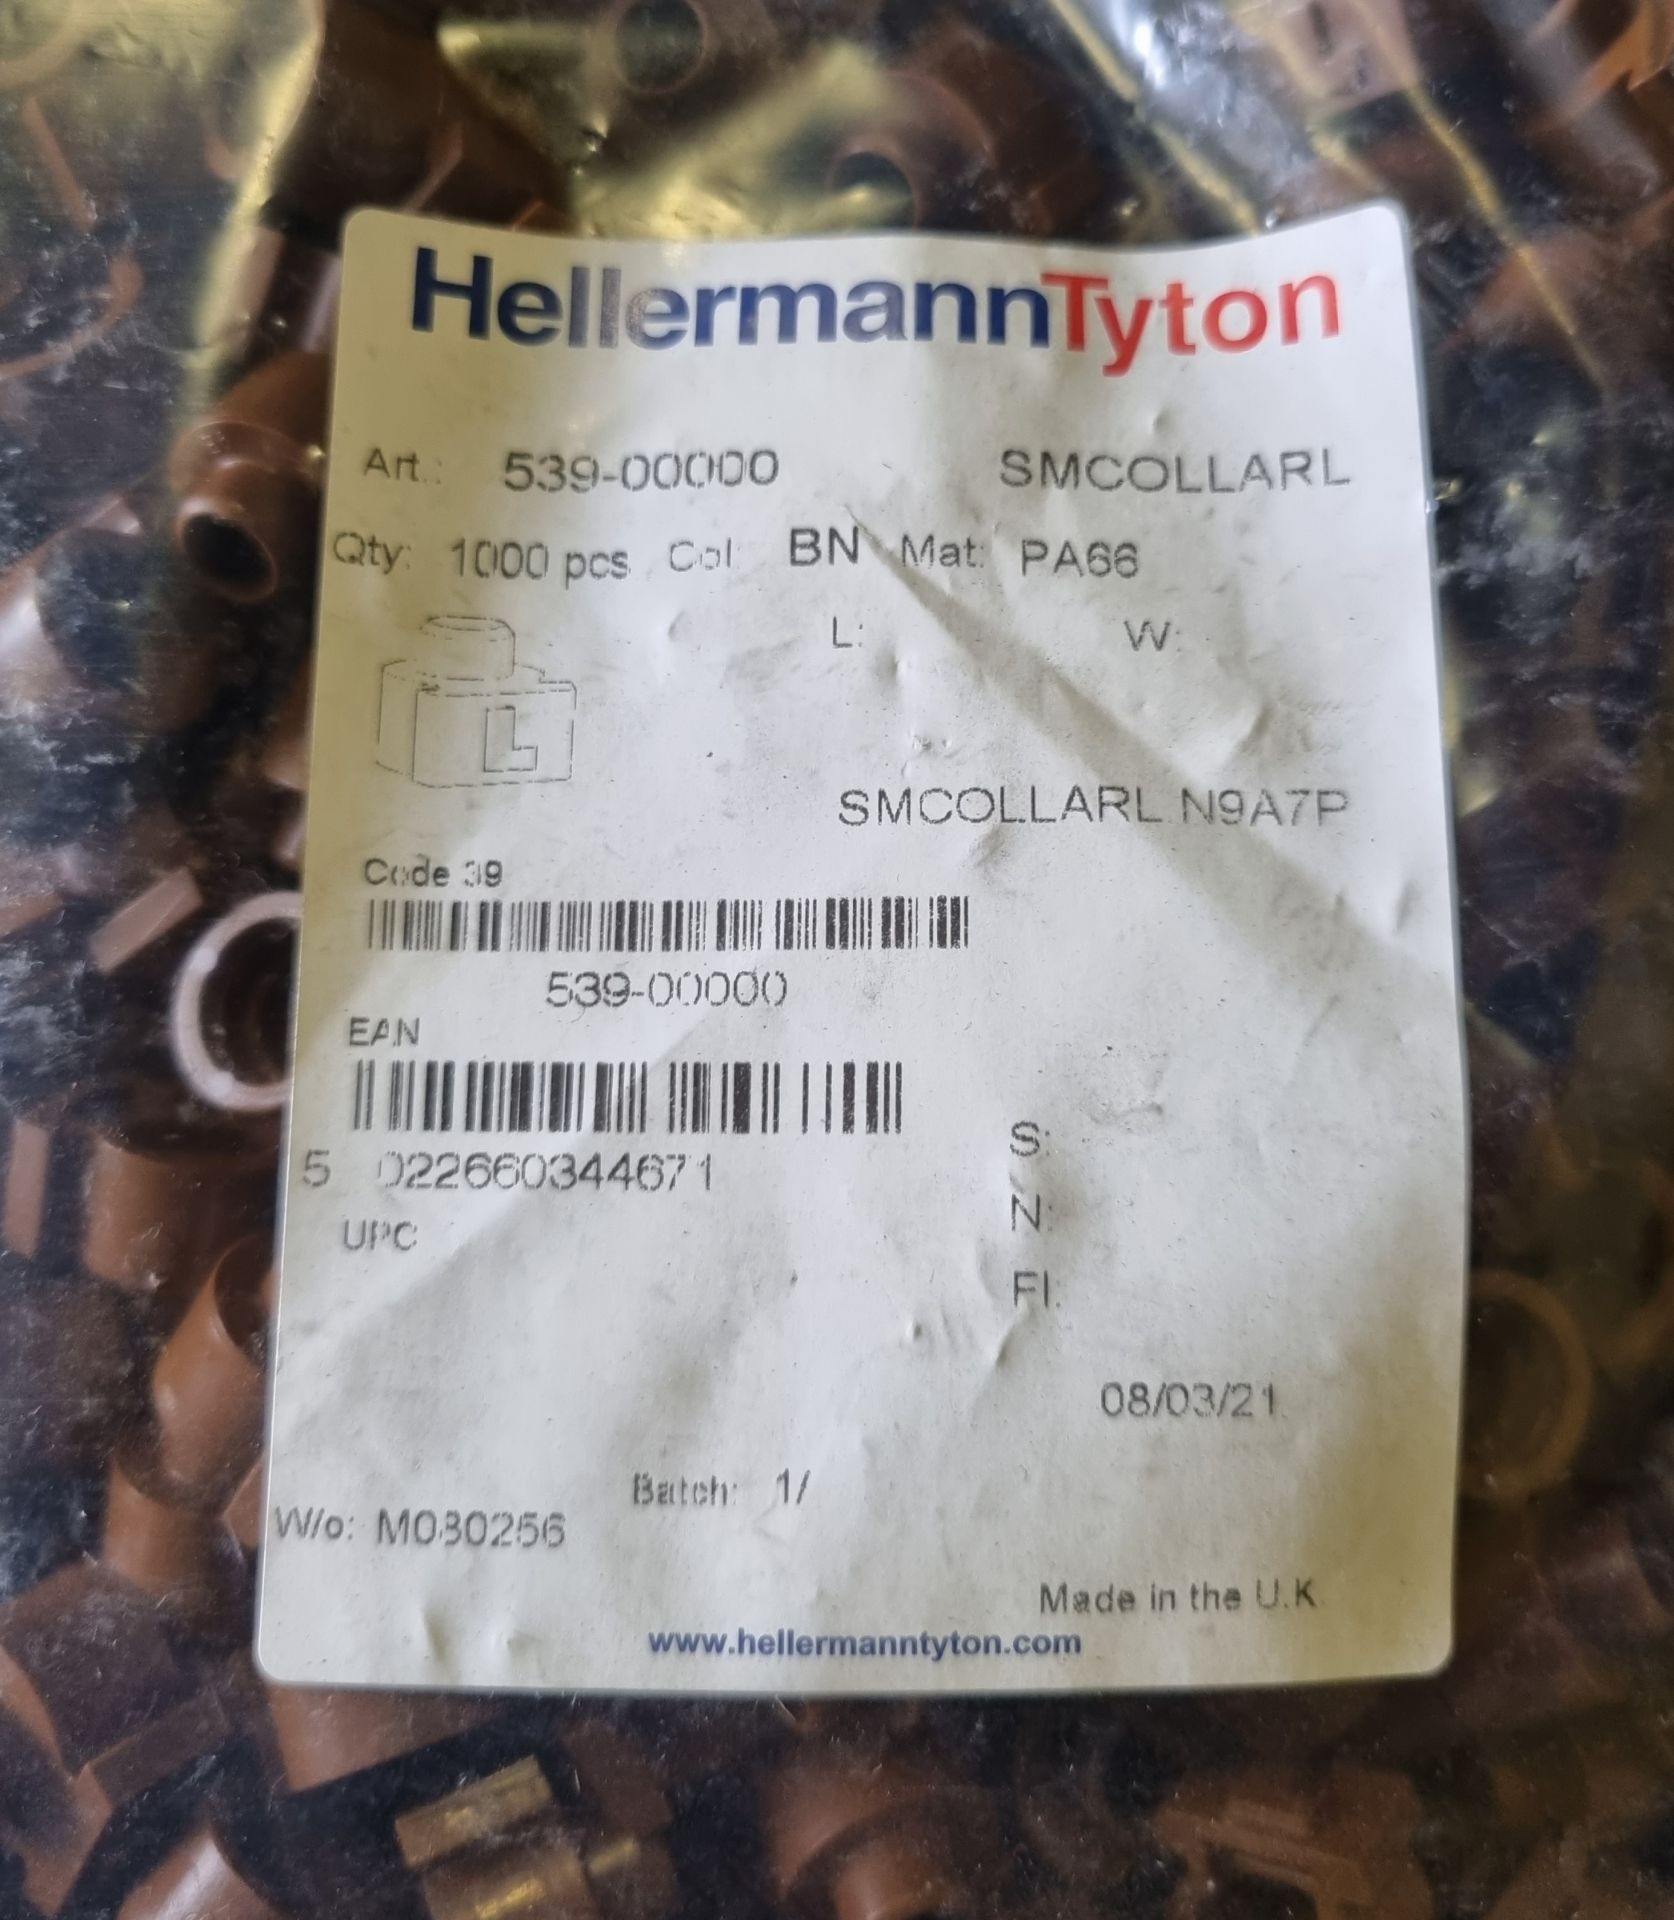 14x packs of HellermannTyton smart meter cable collars - brown (L - Live) - 1000 collars per pack - Bild 3 aus 3